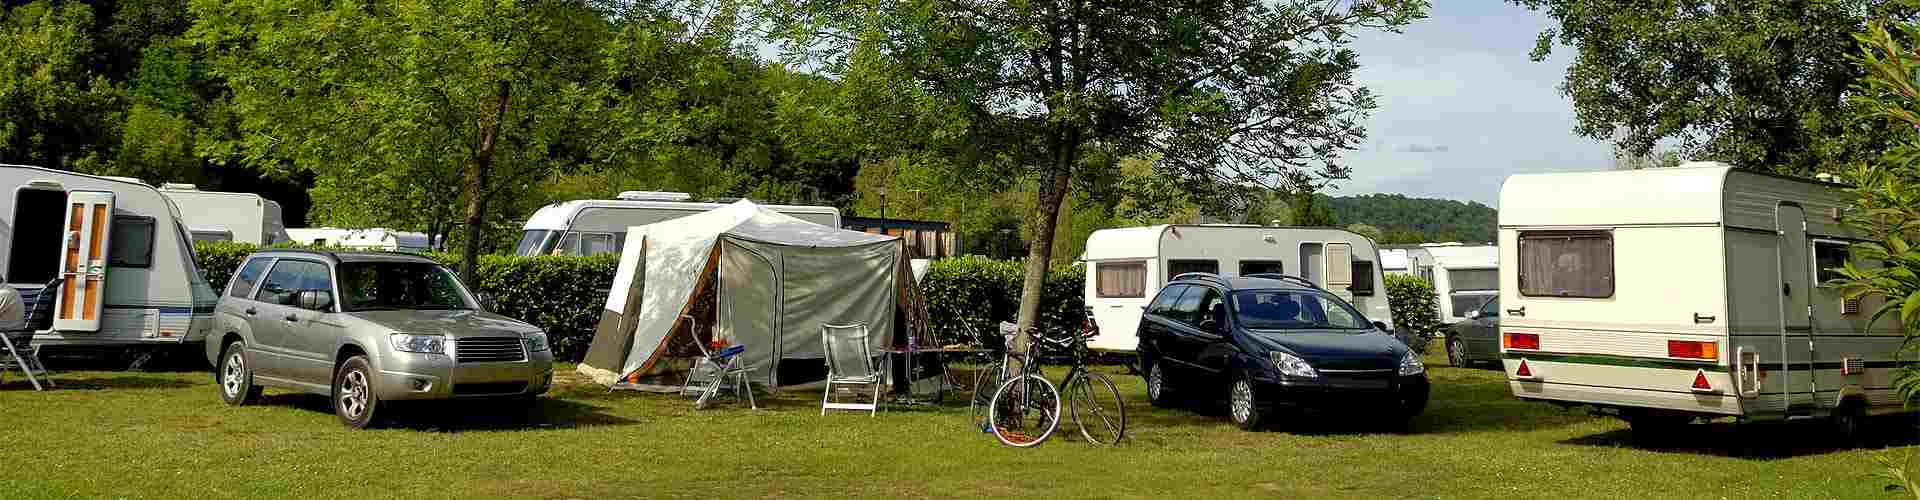 campings-bungalows